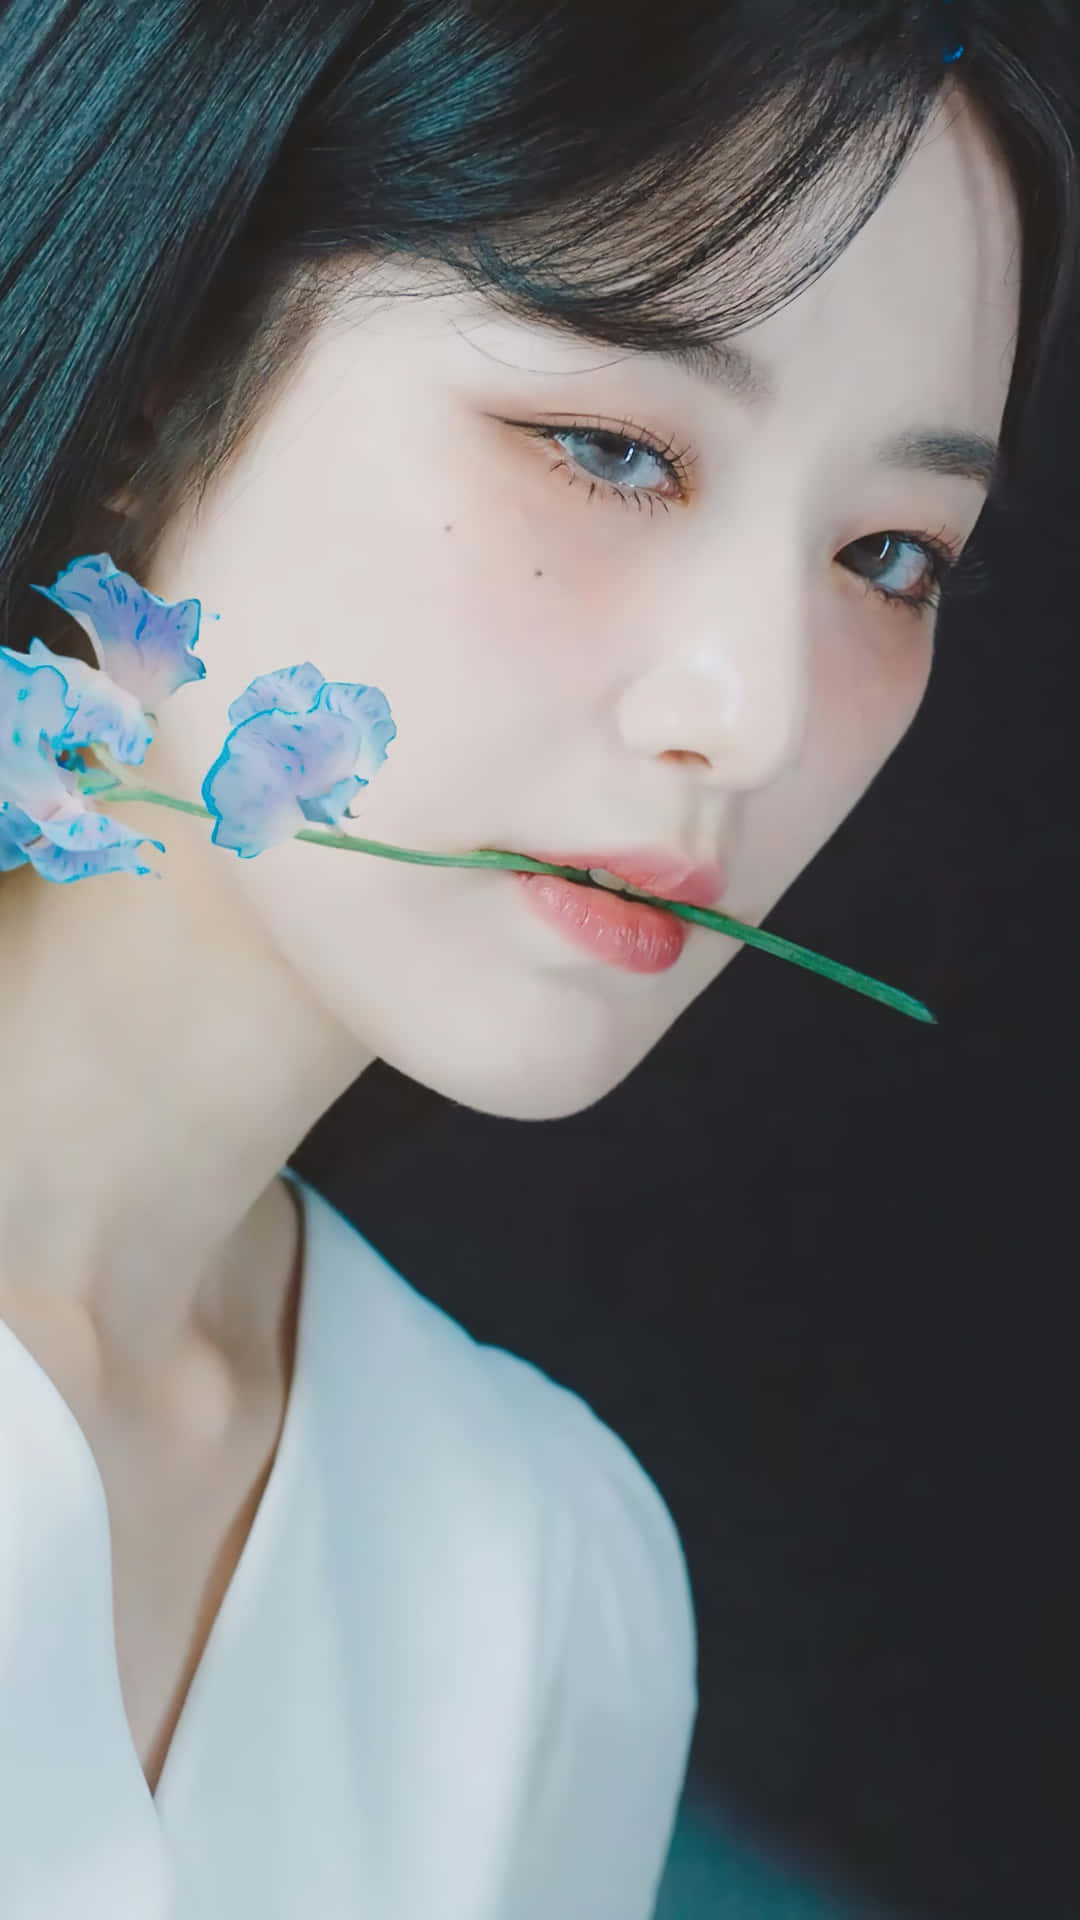 Elegant Portraitwith Blue Flowers Wallpaper